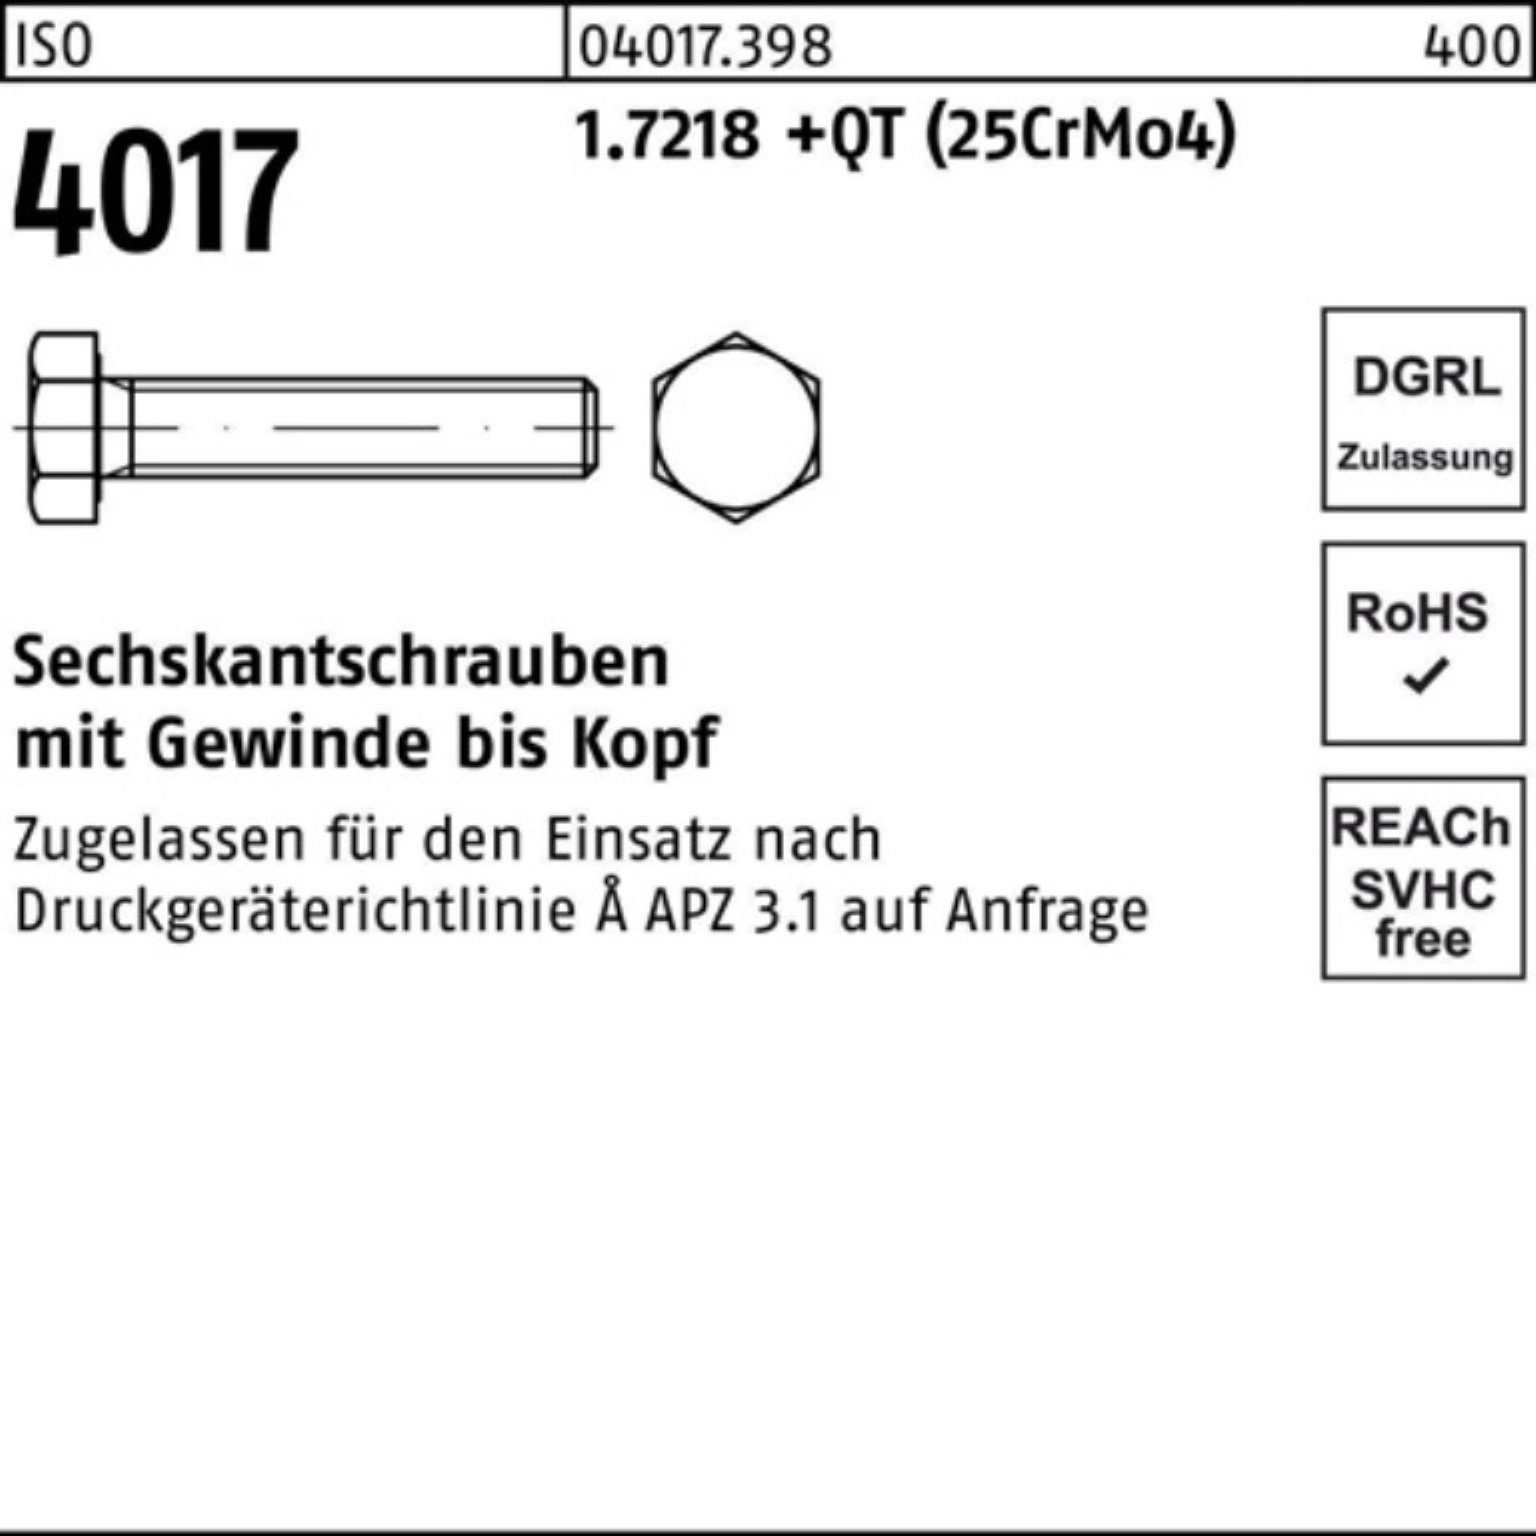 Sechskantschraube (25CrMo4) Sechskantschraube 150 ISO 100er VG 4017 Pack M30x +QT 1.7218 Bufab